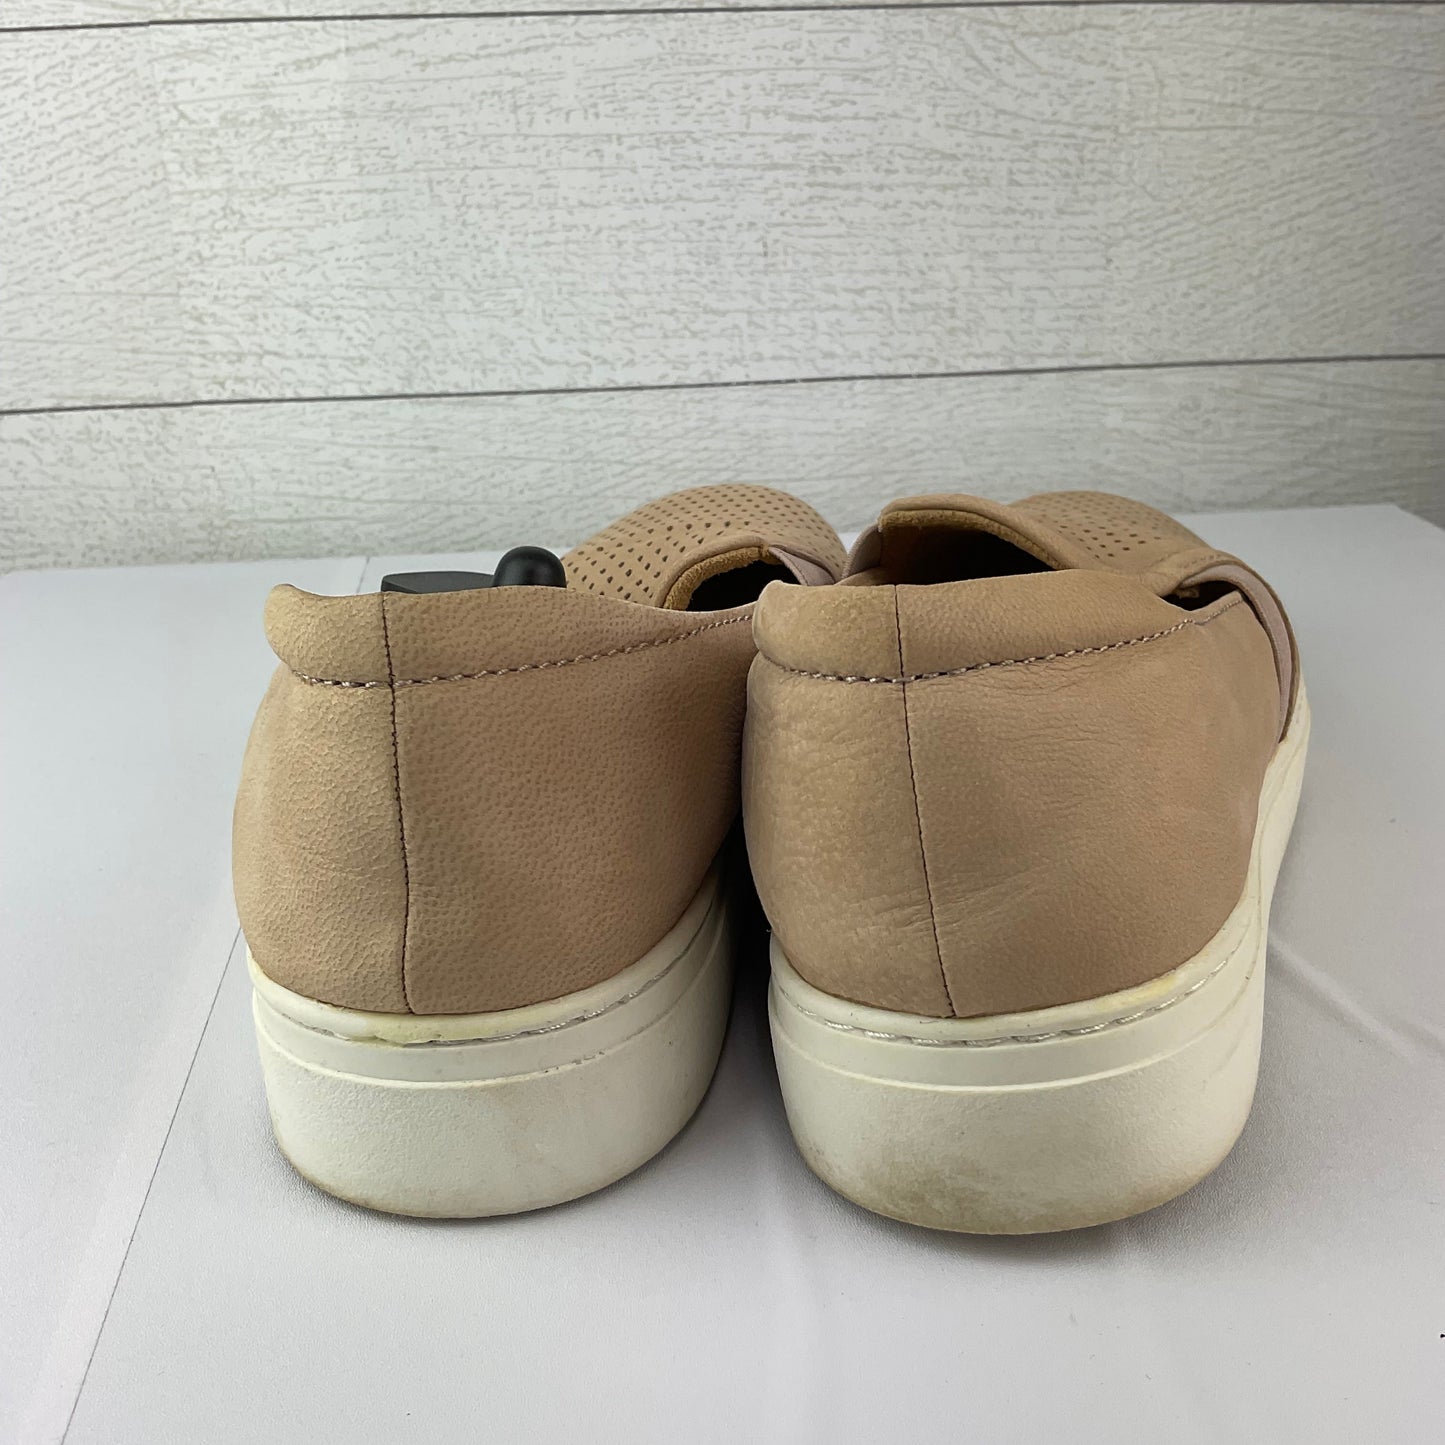 Cream Shoes Flats Naturalizer, Size 8